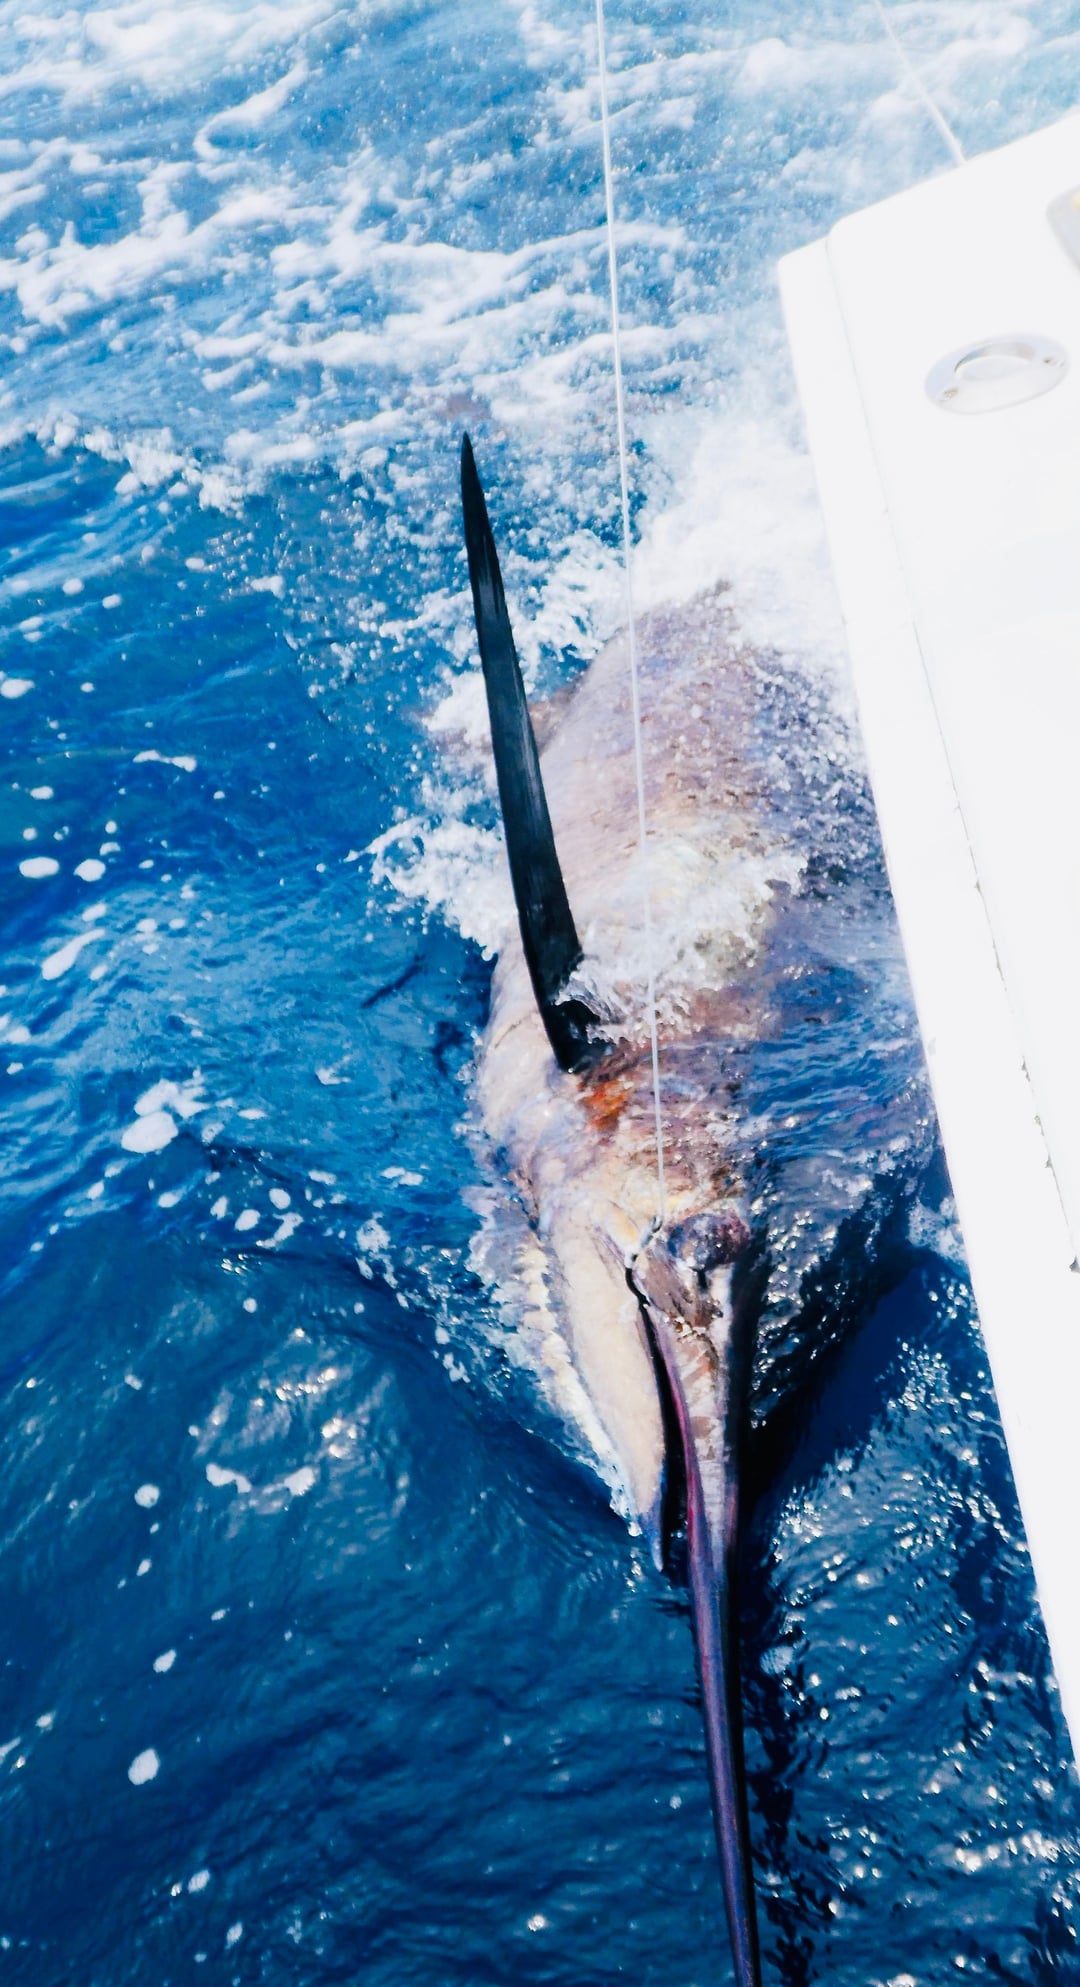 Expert Insight Into Blue Marlin Fishing Hook Sets - InTheBite